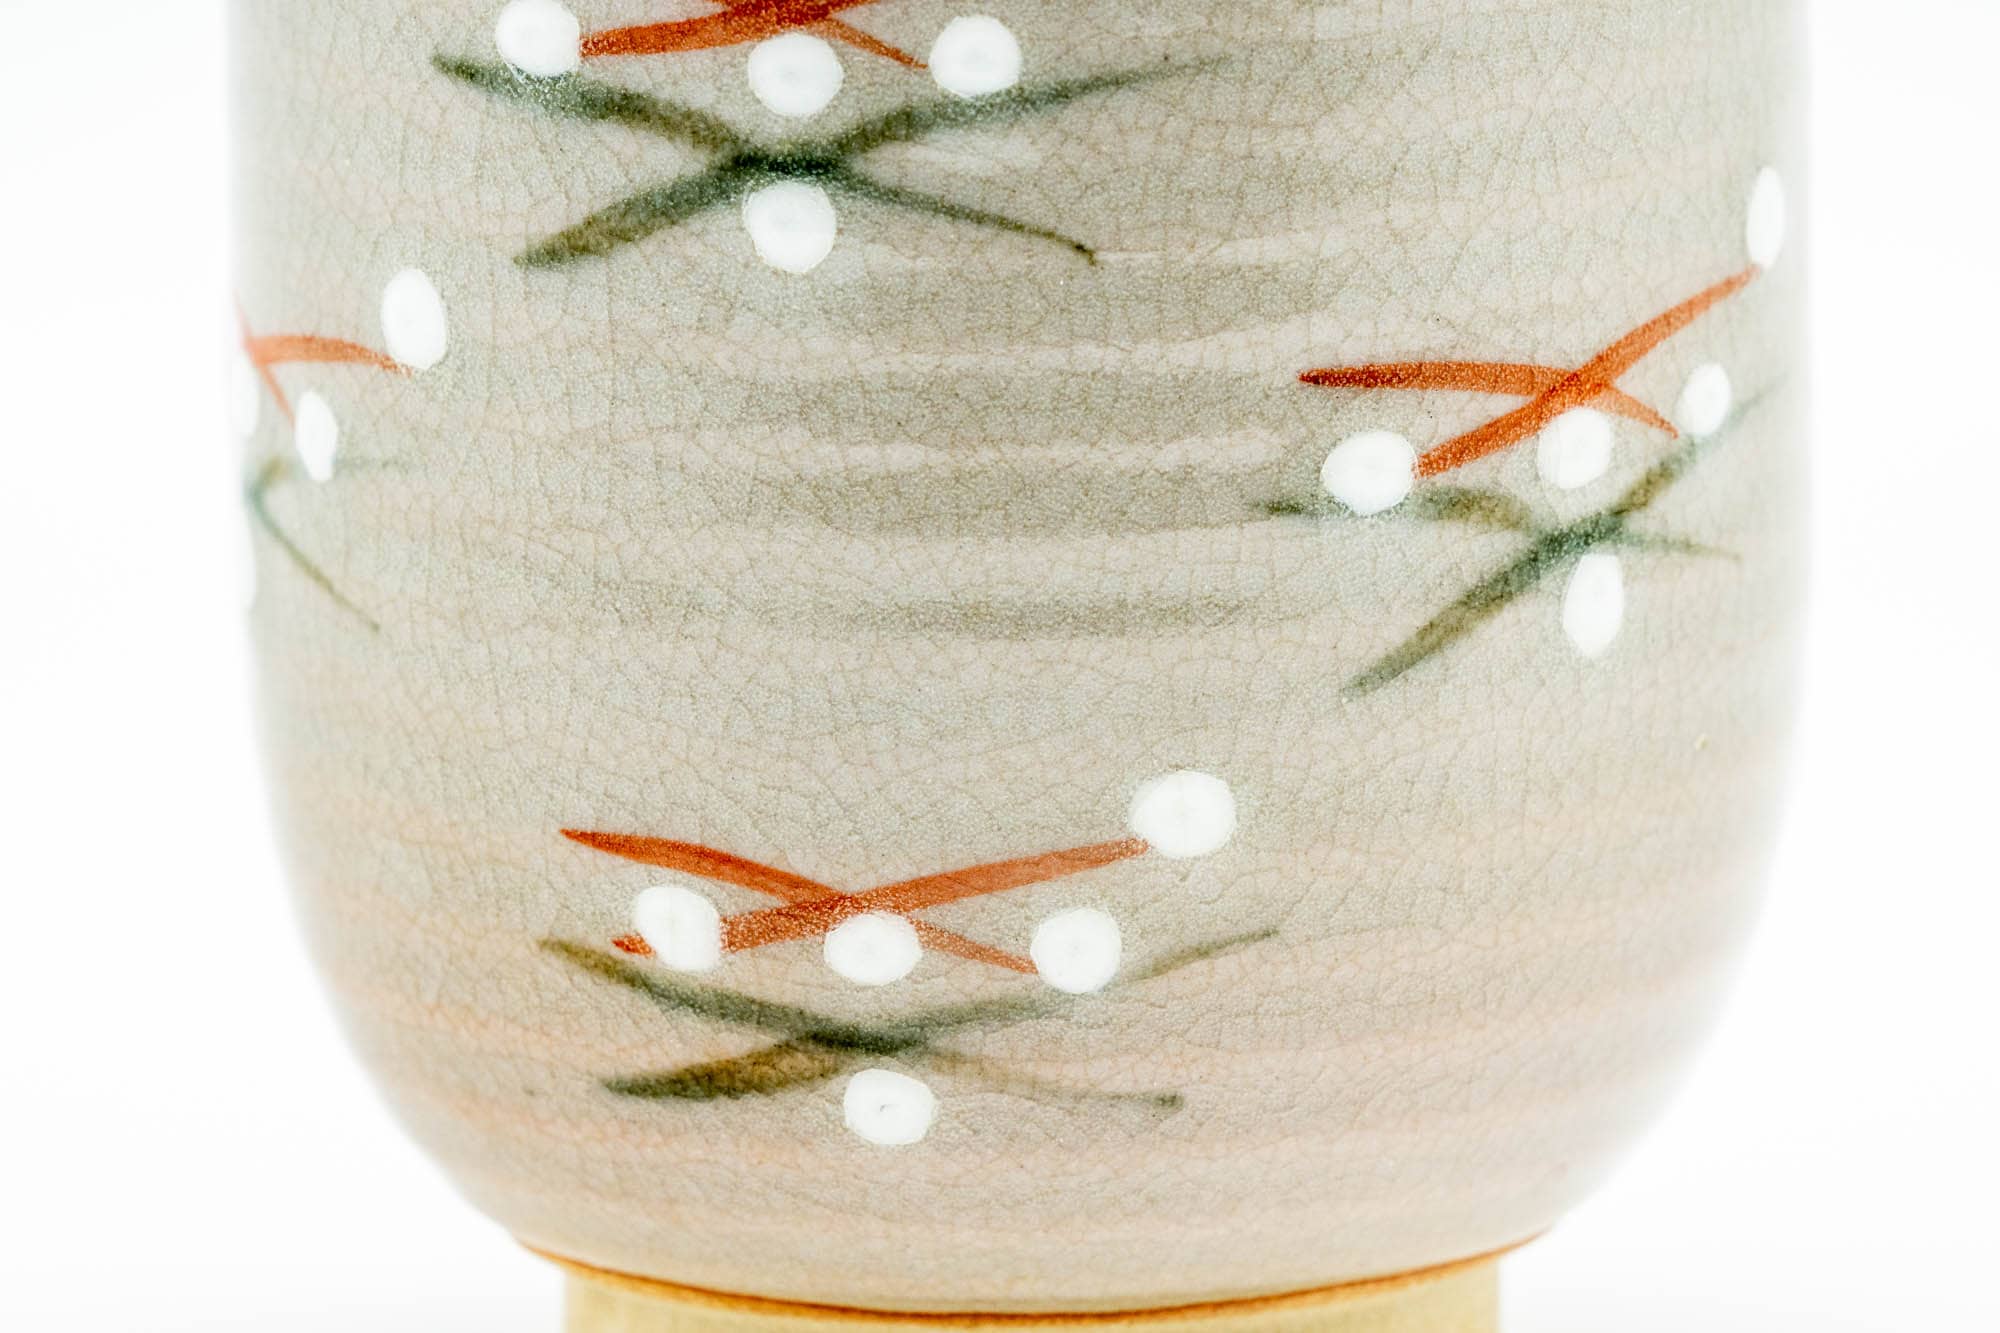 Japanese Teacup - Beige Geometric Decorated Yunomi - 175ml